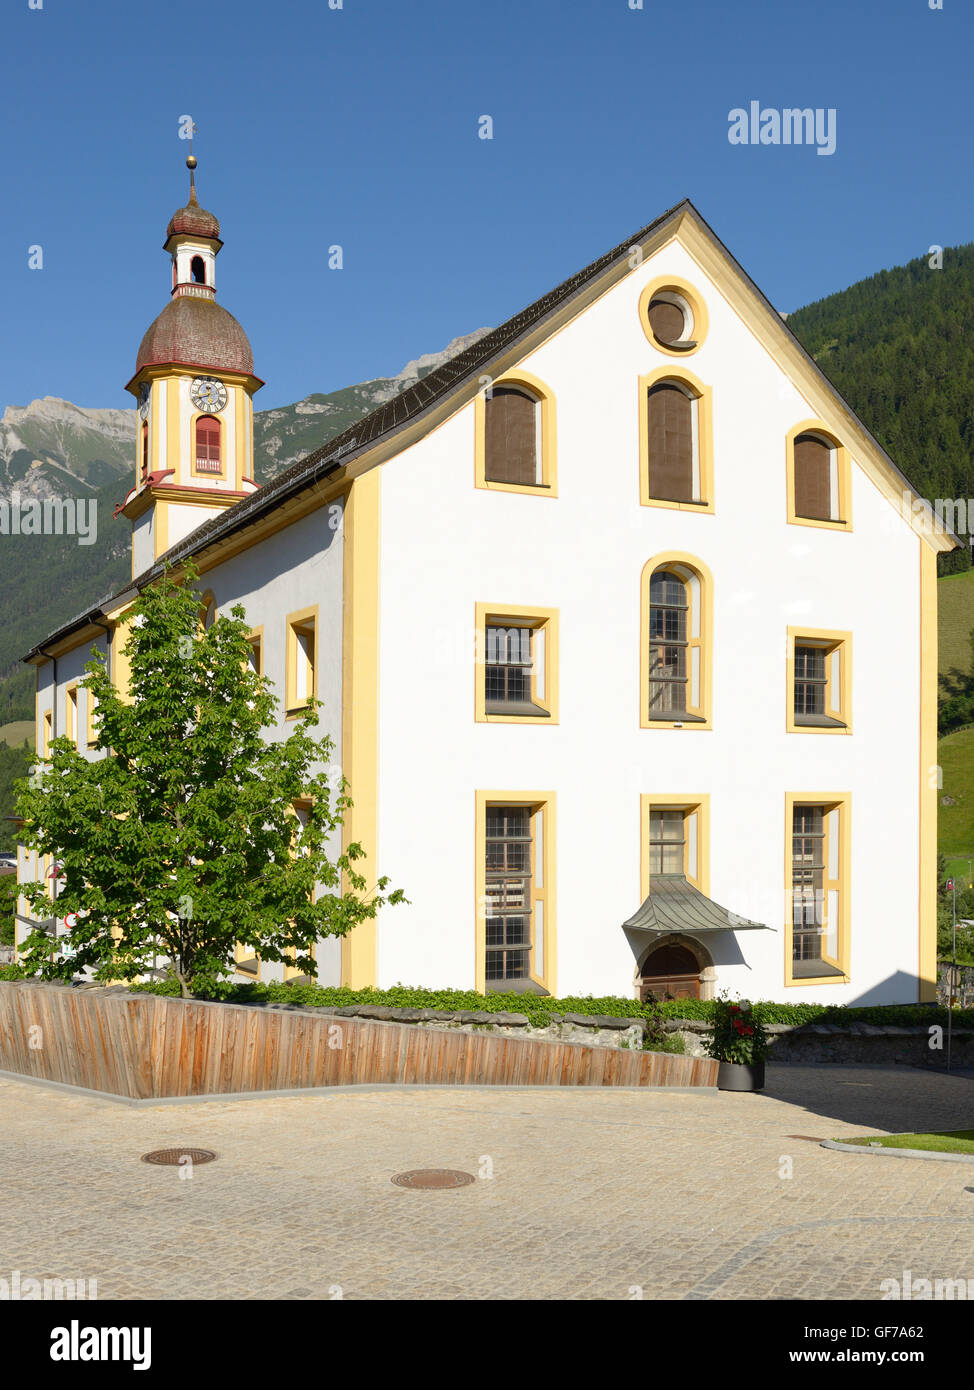 St. Georg church, build in 1780, Neustift, Stubaital - Stubai valley, Tyrol, Austria, Europe Stock Photo